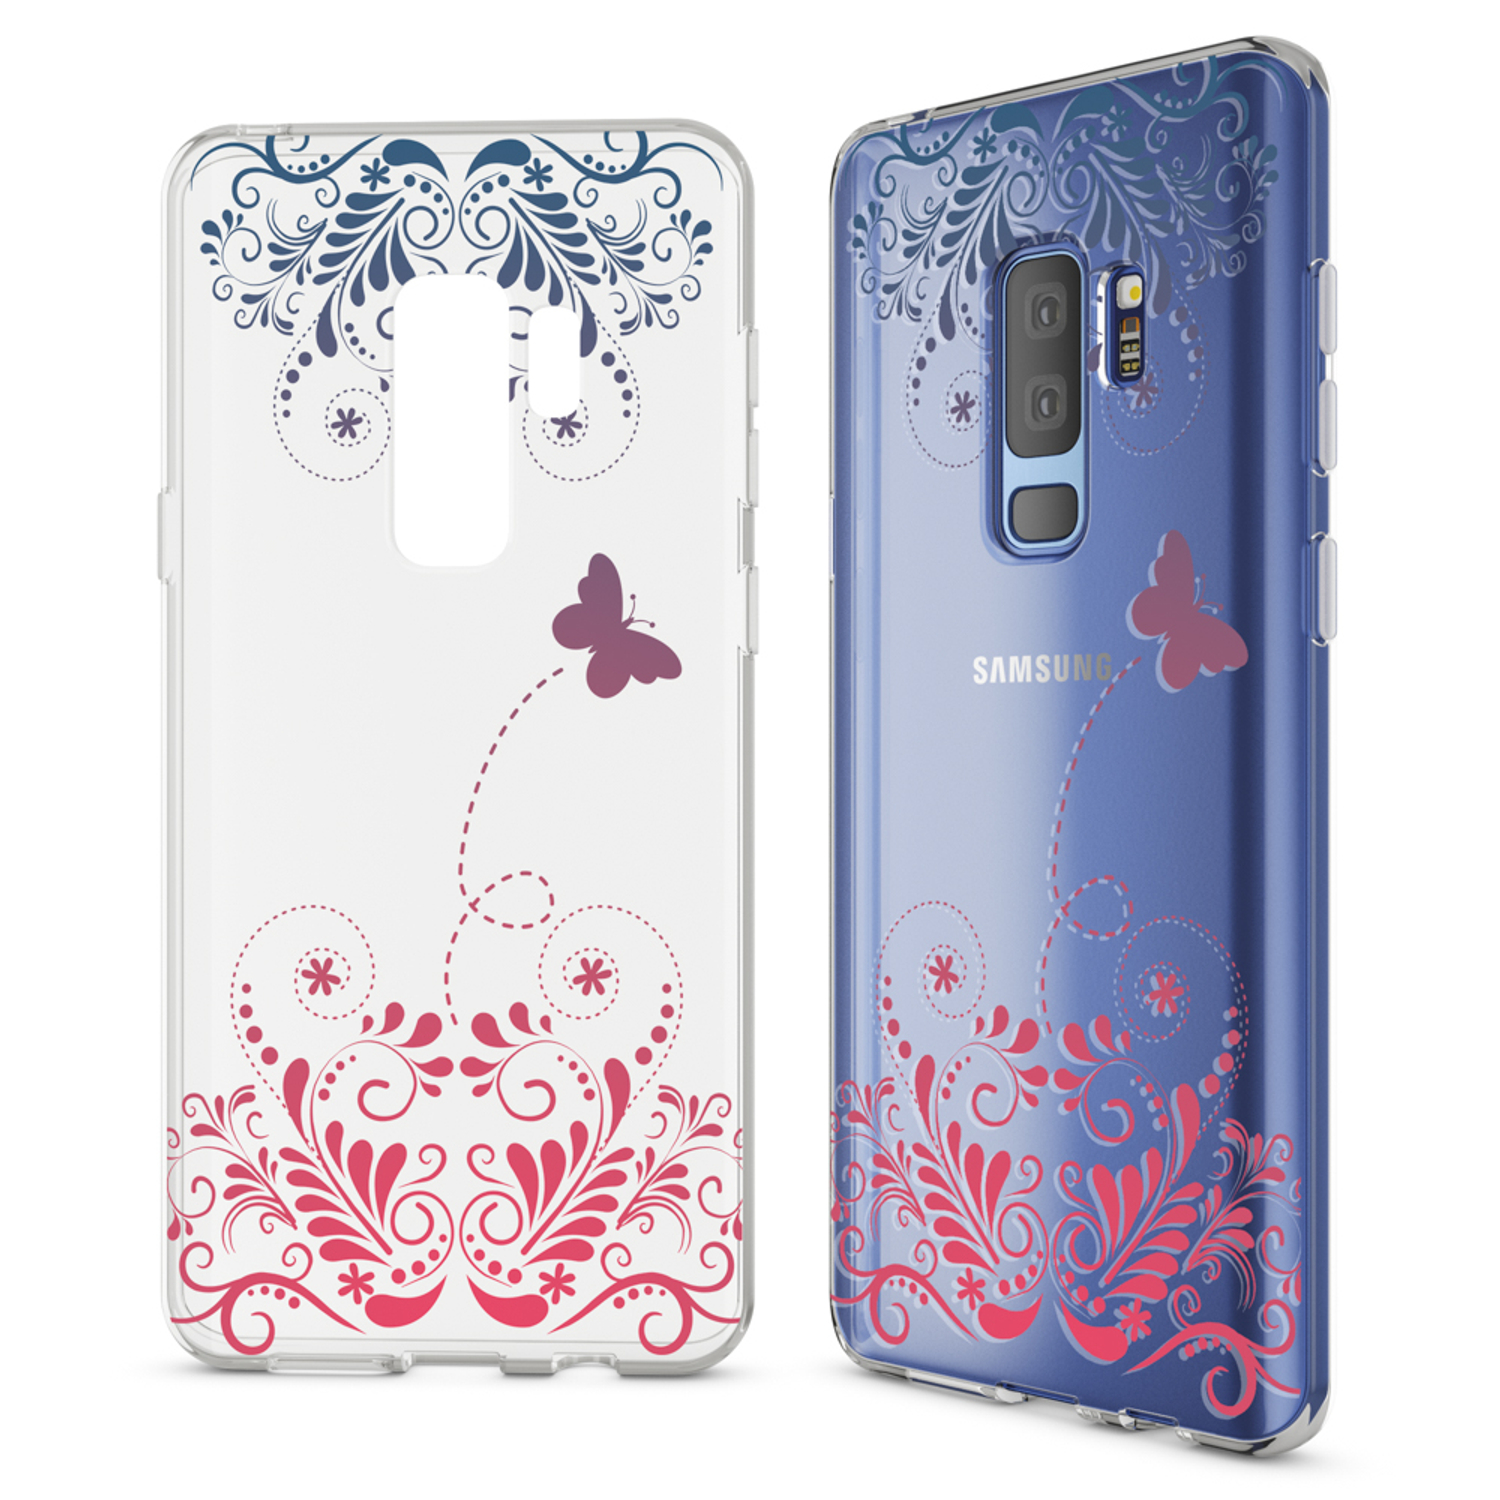 Backcover, Mehrfarbig Plus, Motiv Galaxy Hülle, NALIA Silikon S9 Samsung,